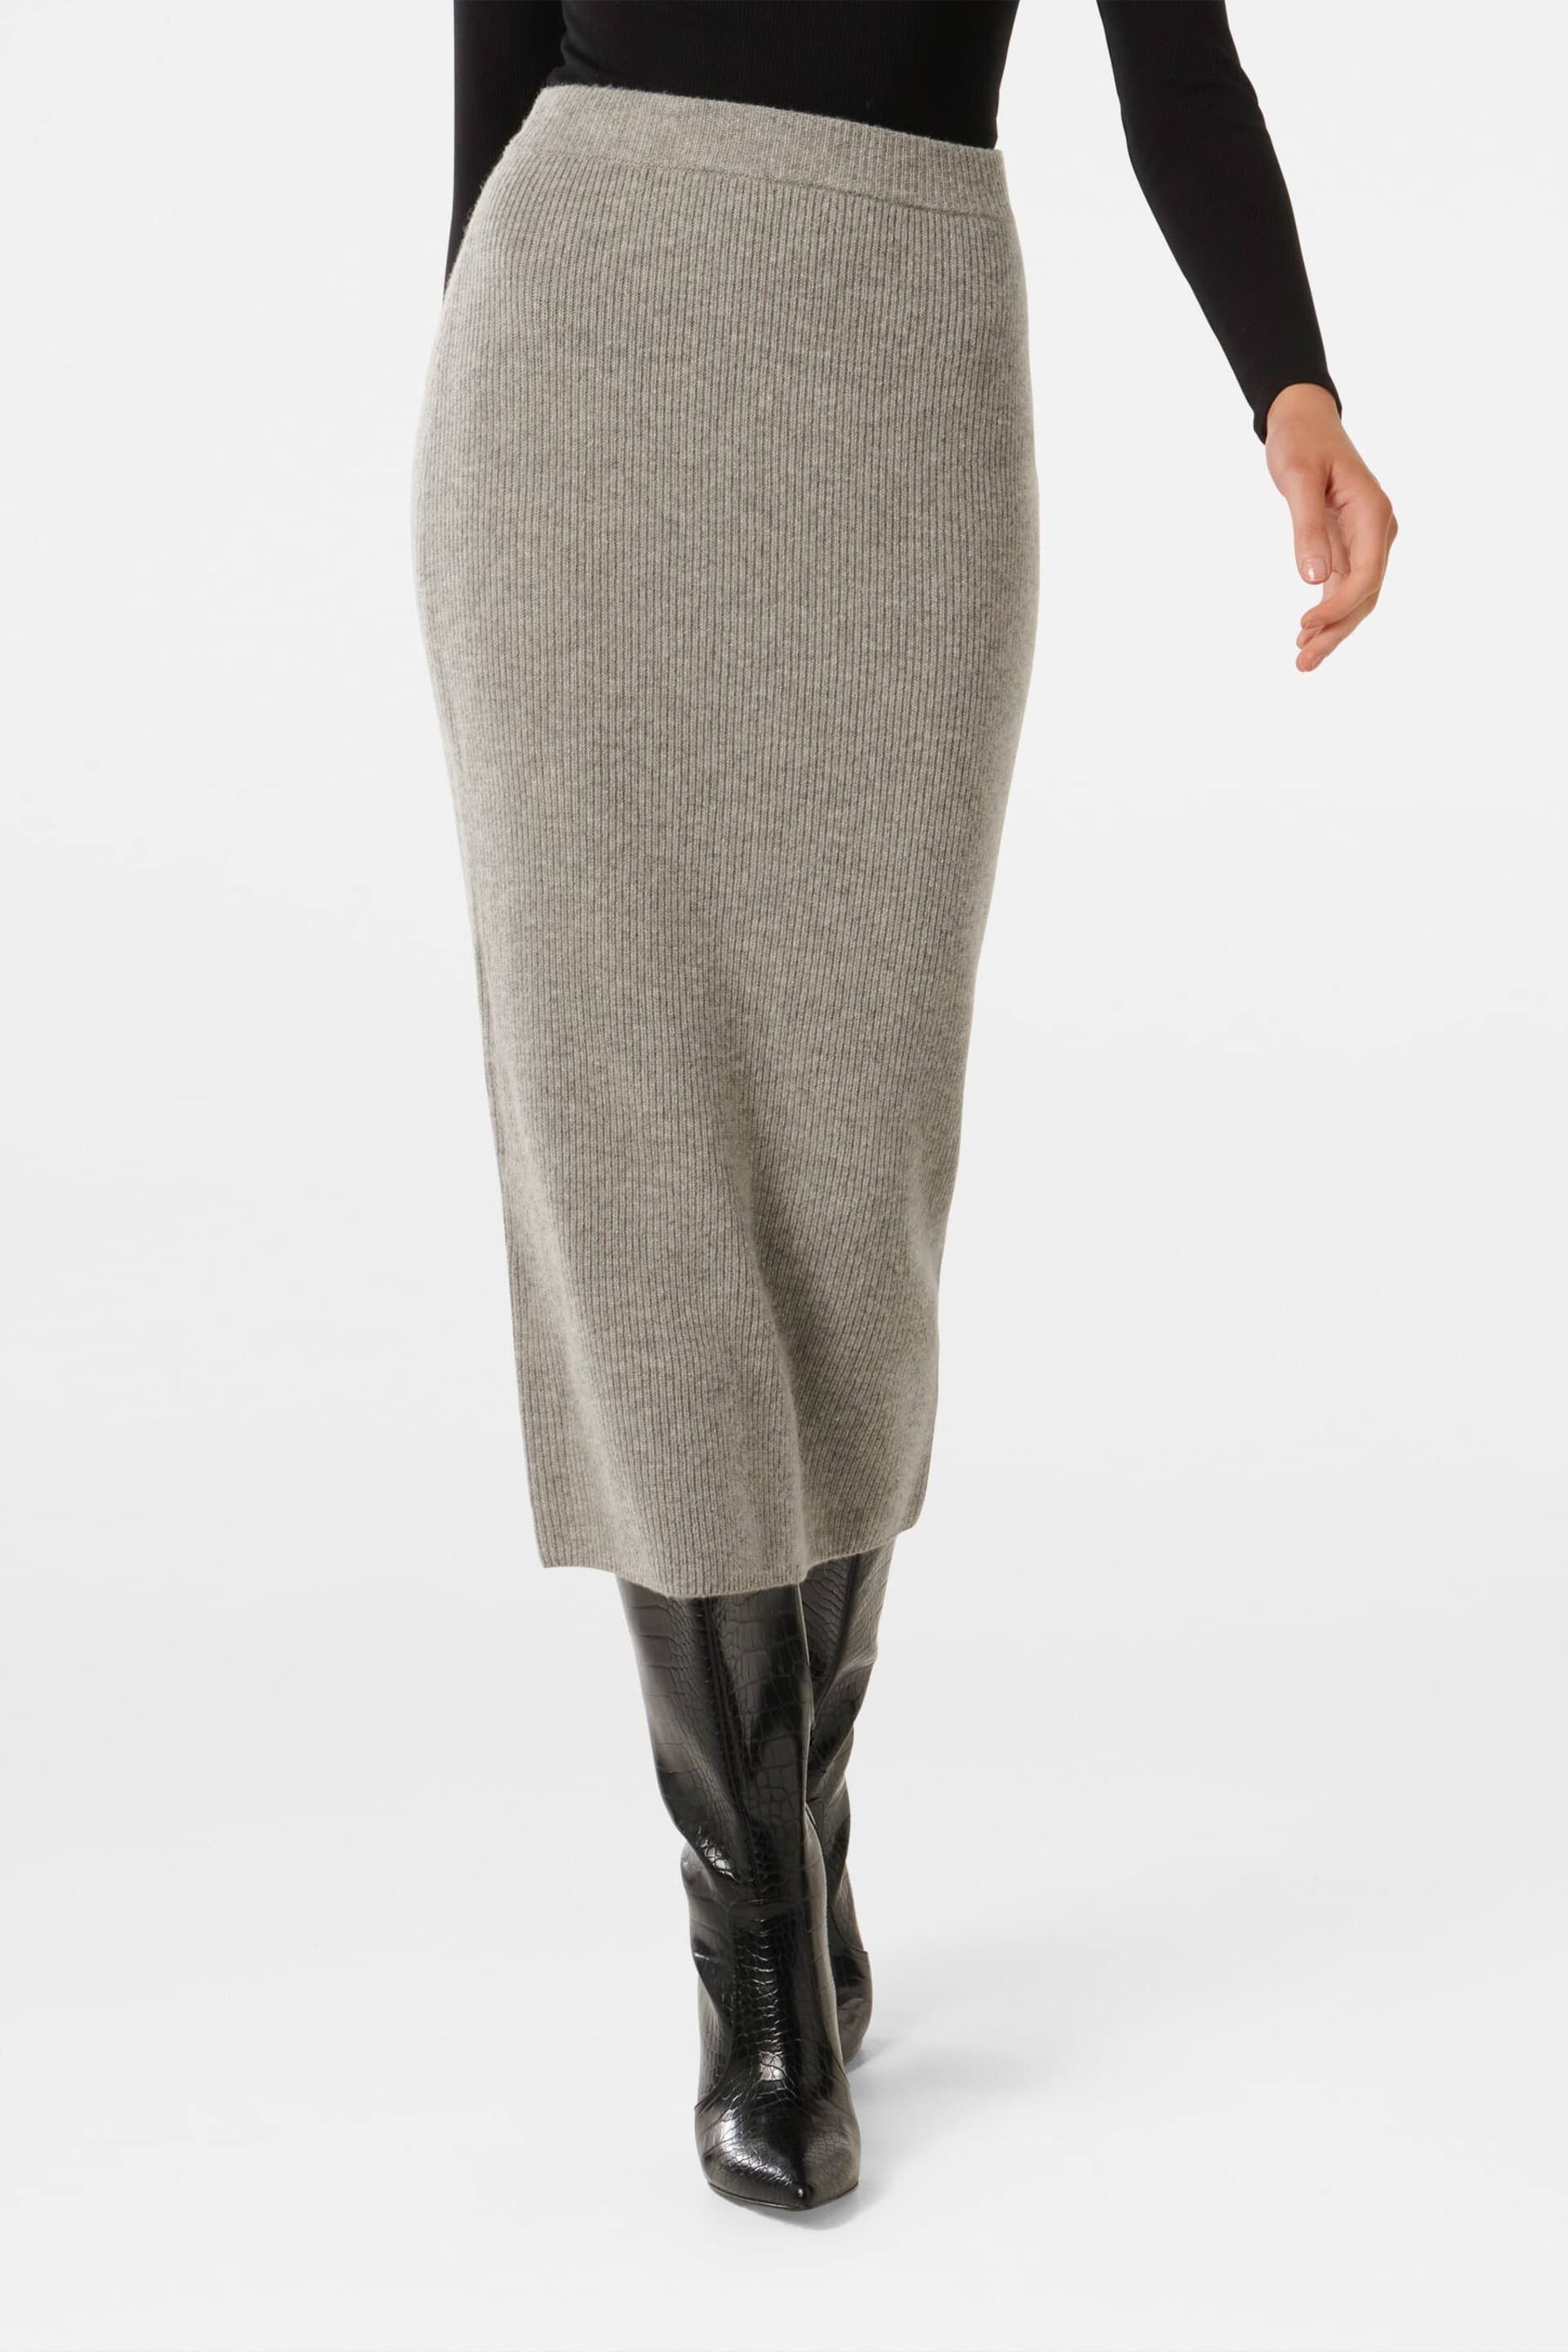 Forever New Grey Erin Knit Skirt - Image 2 of 5